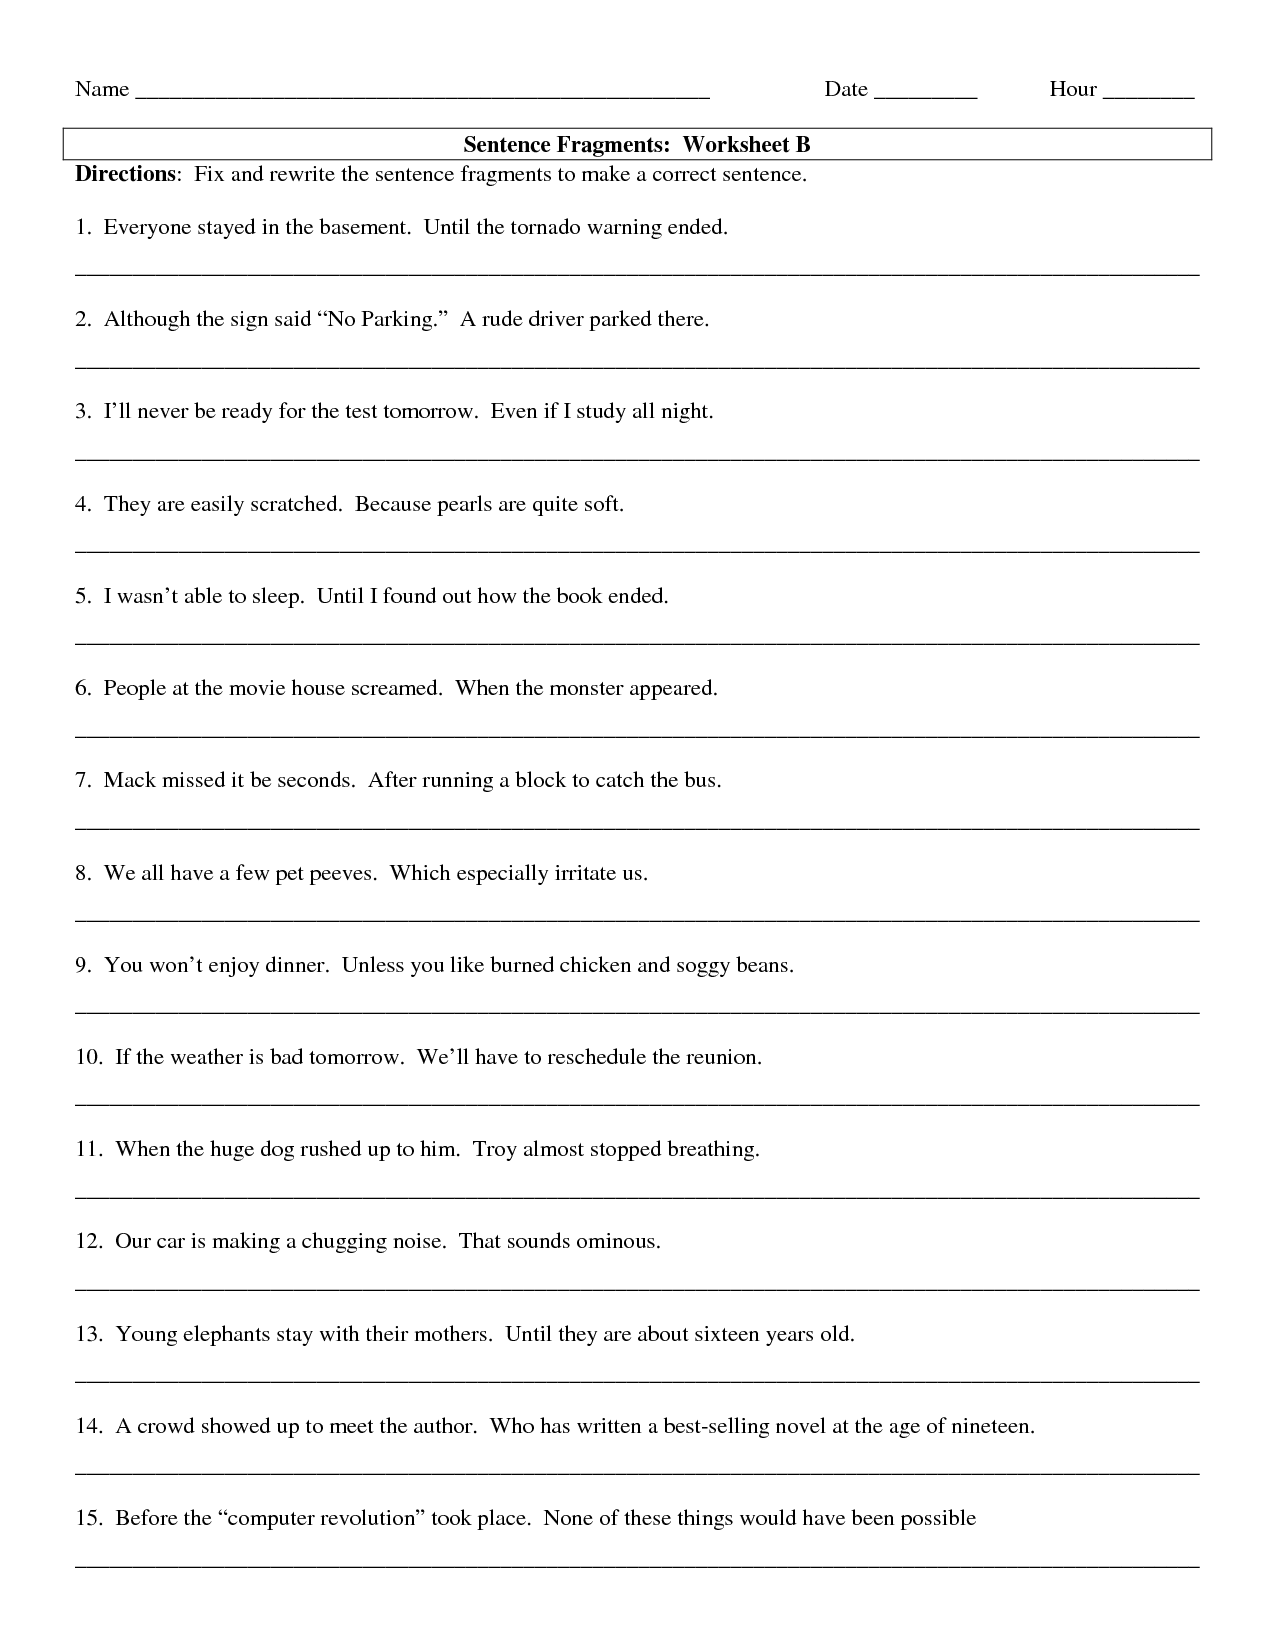 Sentences and Fragments Worksheets Image